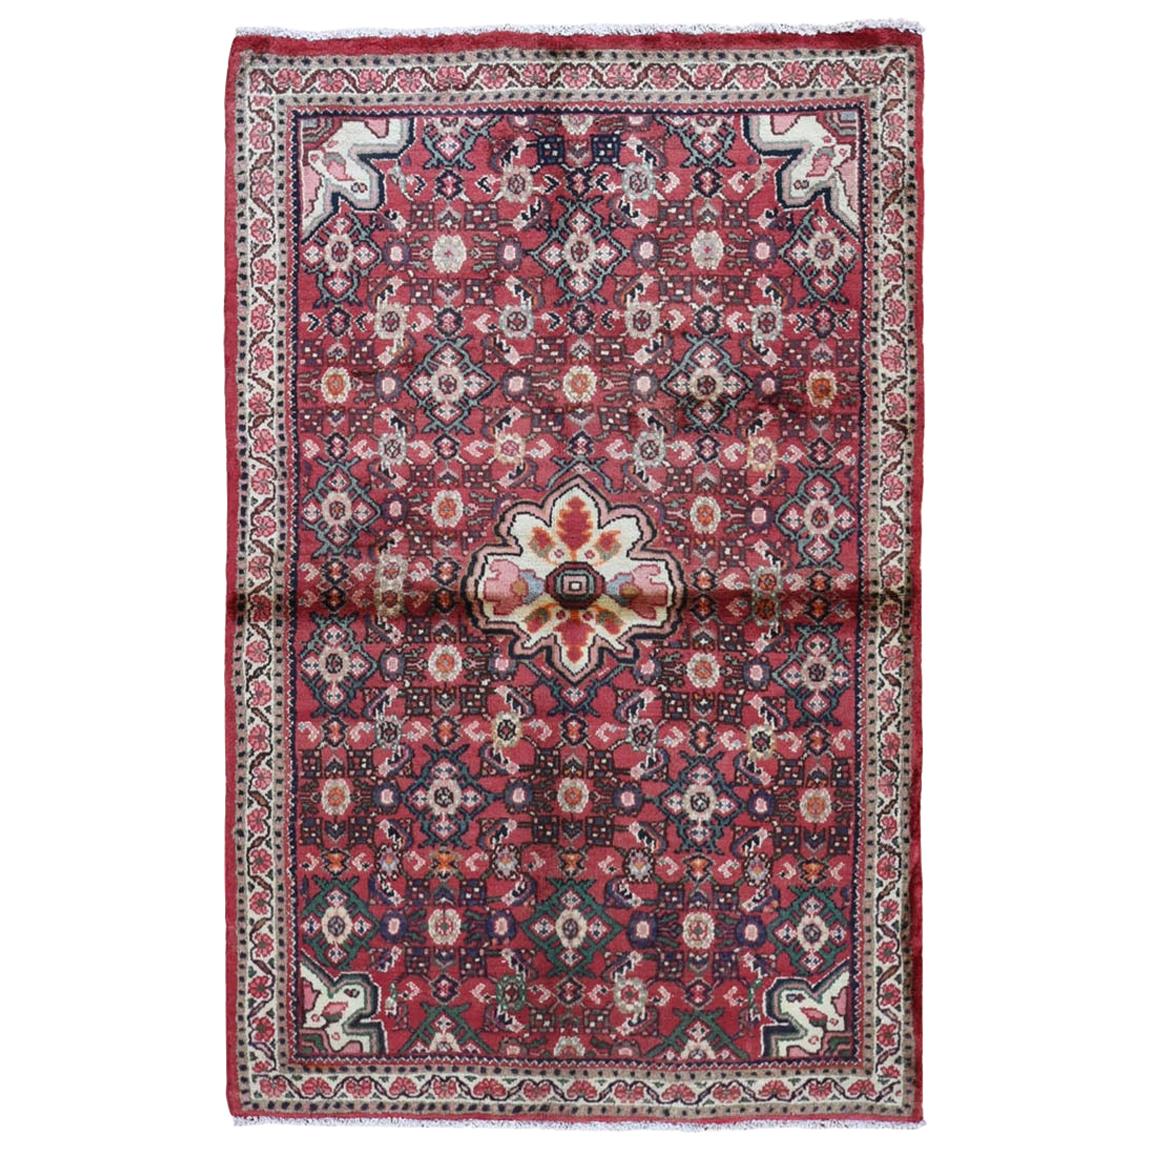 Persian Hamedan carpet hand knotted 100x150 red locket wool short pile Rug 